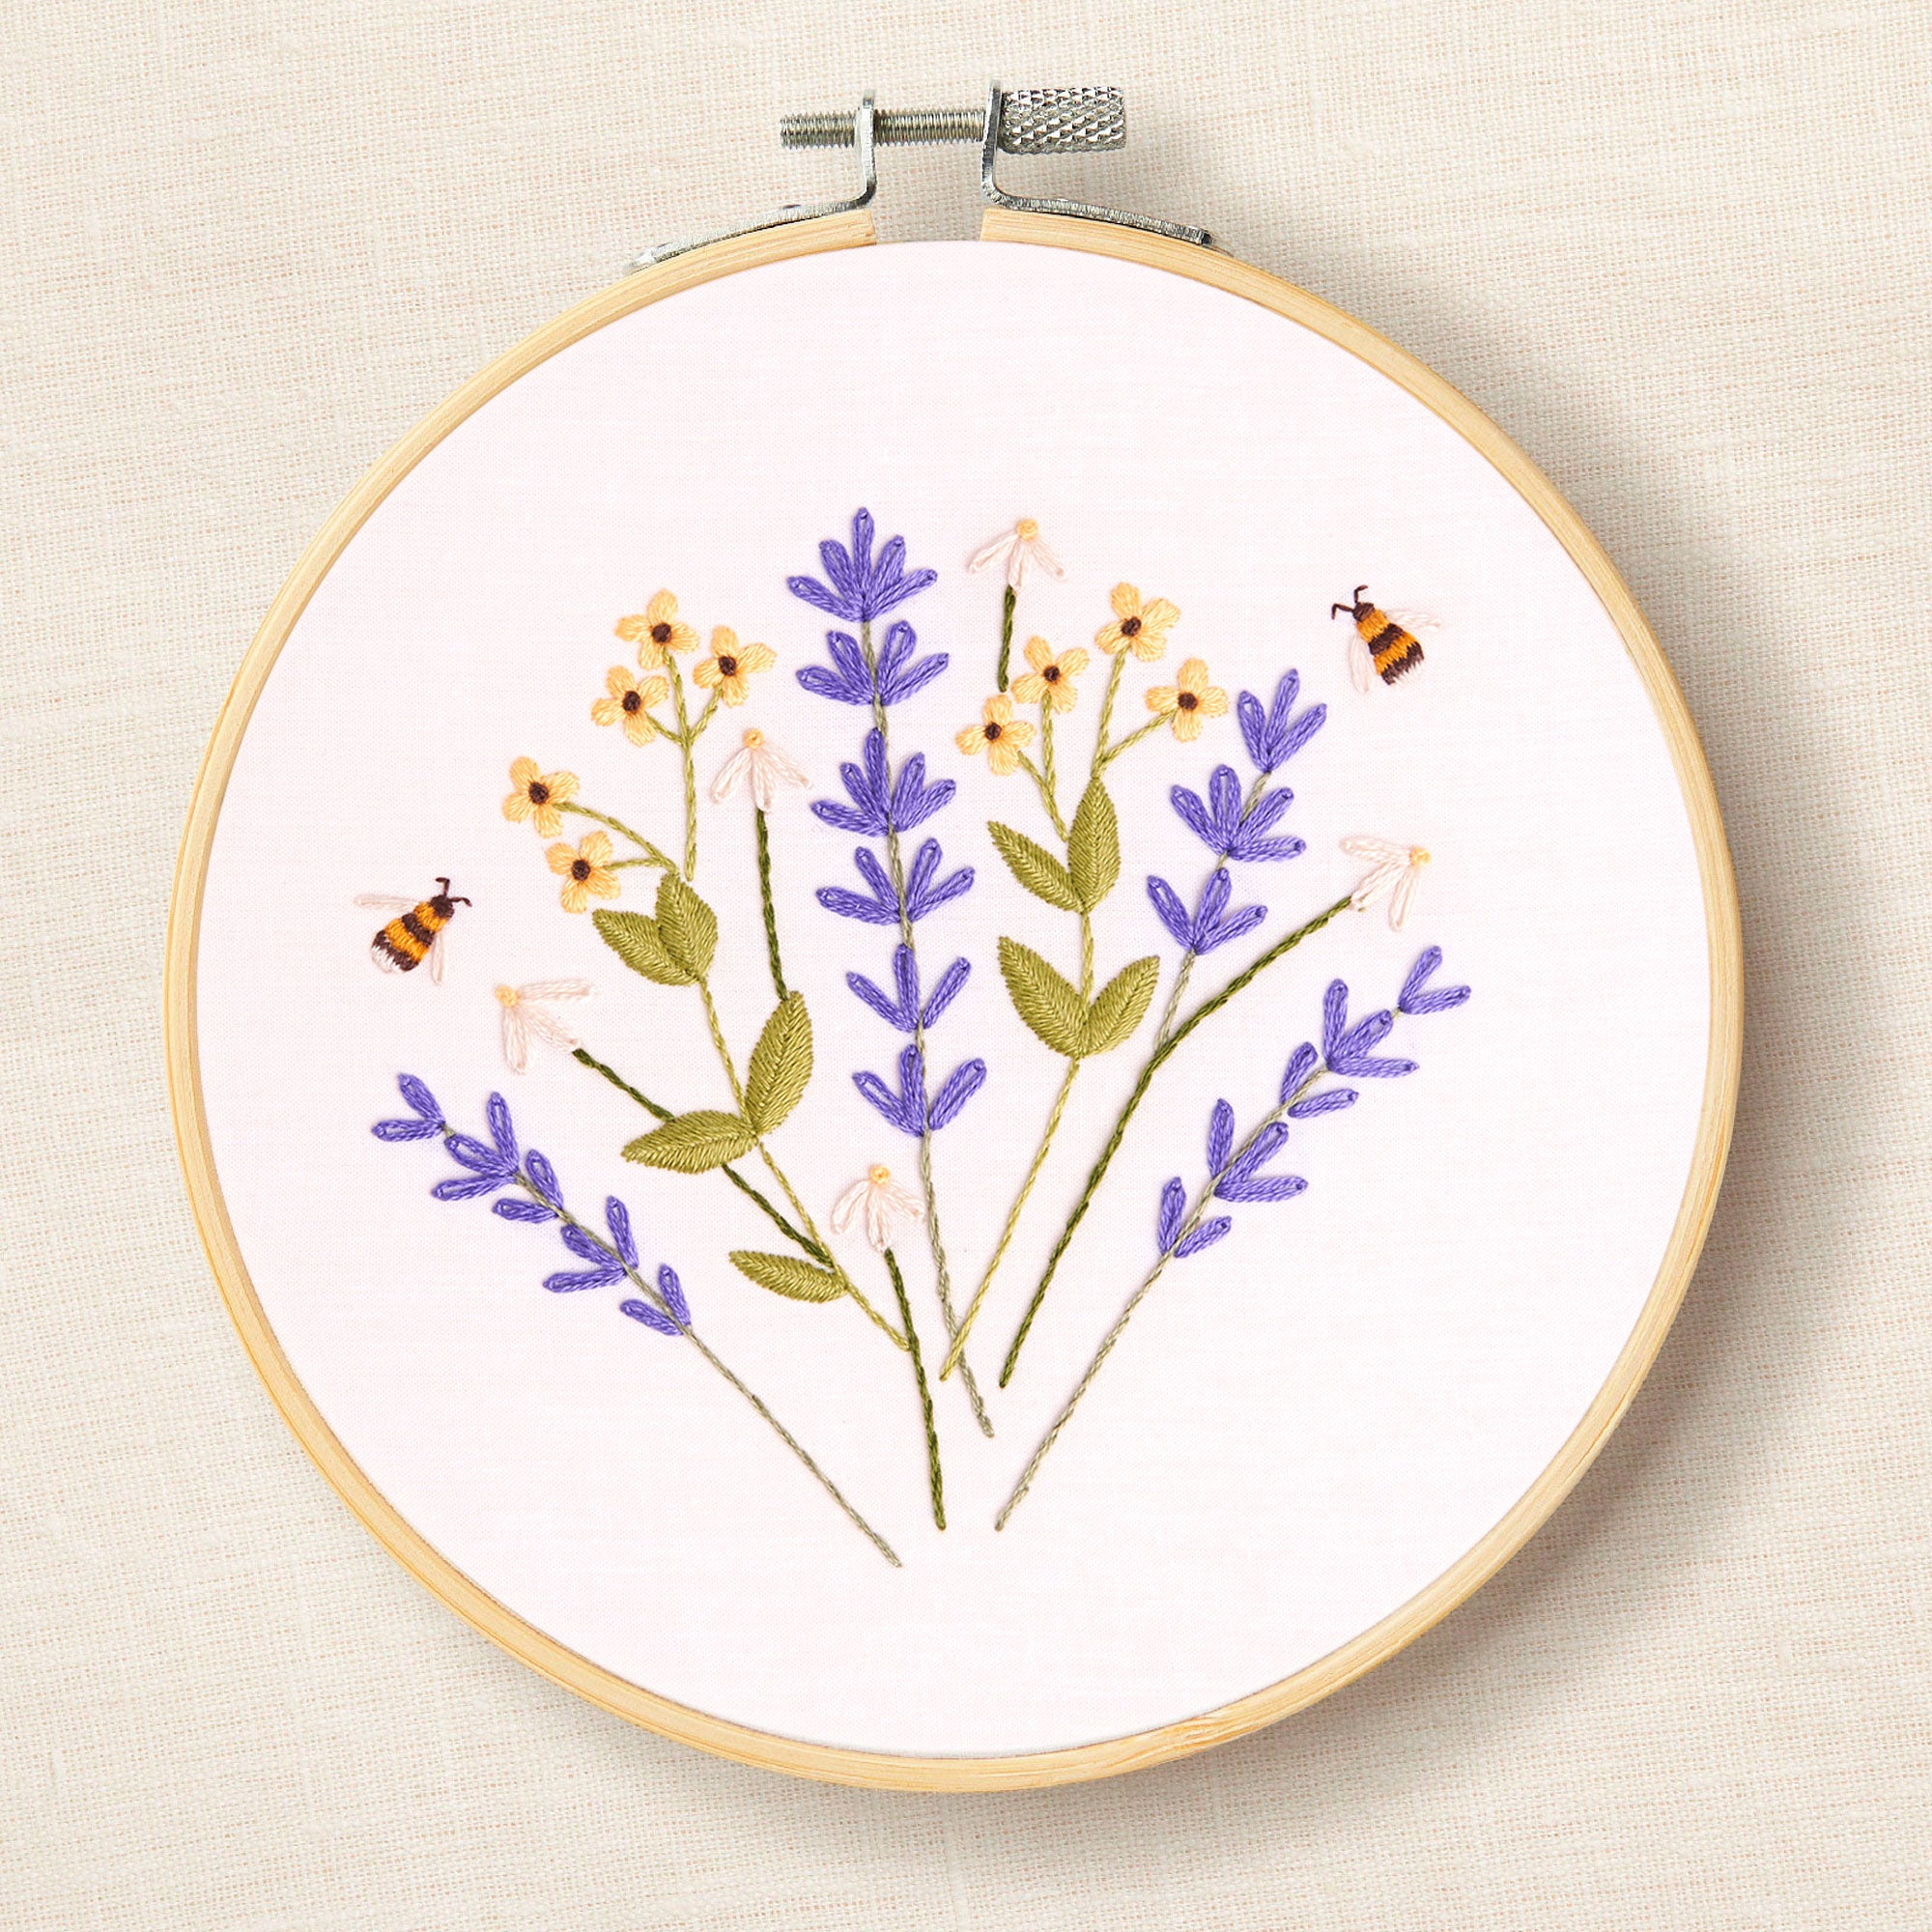 DMC Botanical Wild Flowers by Aurora Menendez (Embroidery Kit)